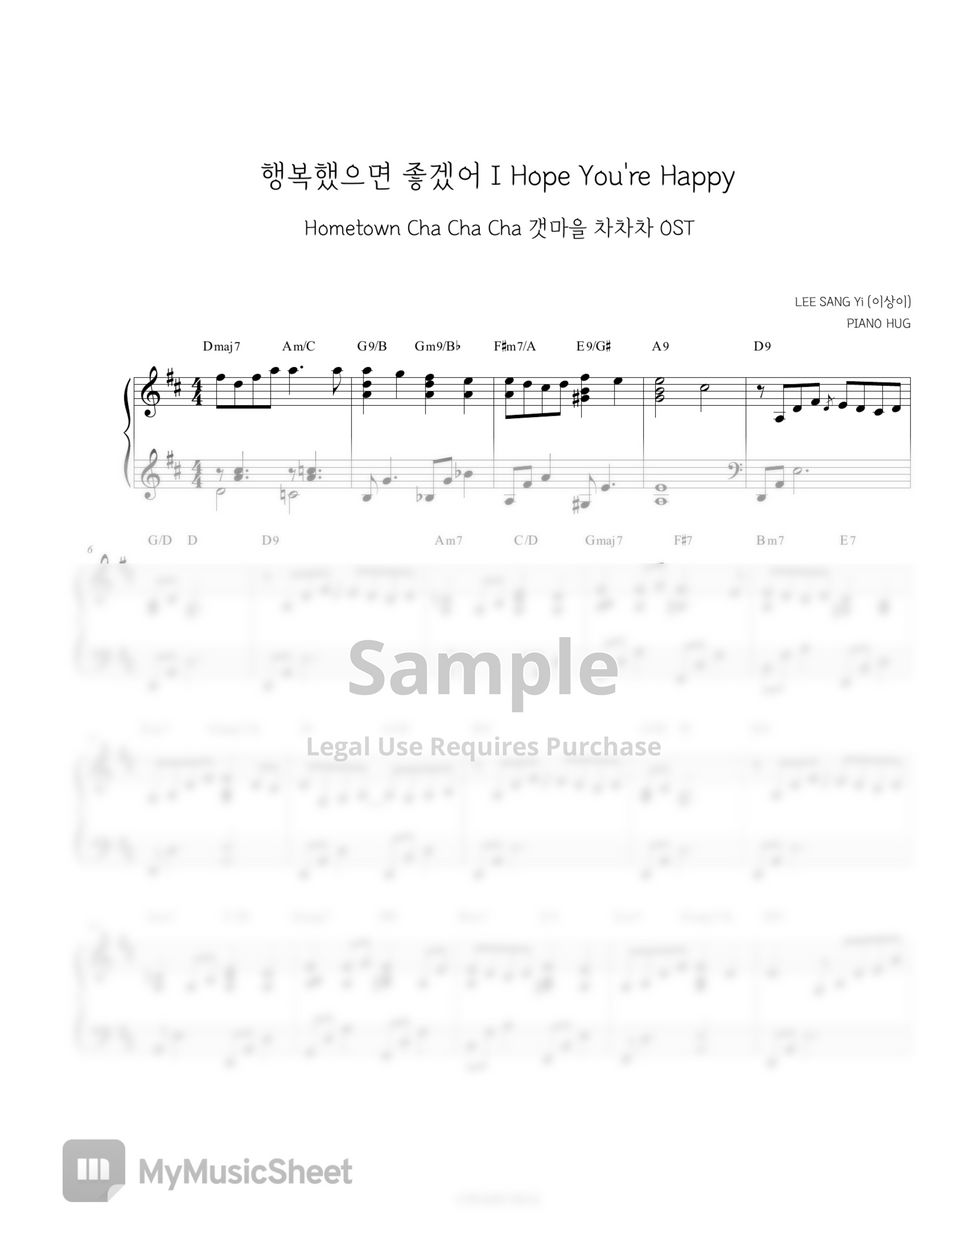 Lee Sang Yi (이상이) - I Hope You're Happy (행복했으면 좋겠어) Hometown Cha Cha Cha OST by Piano Hug